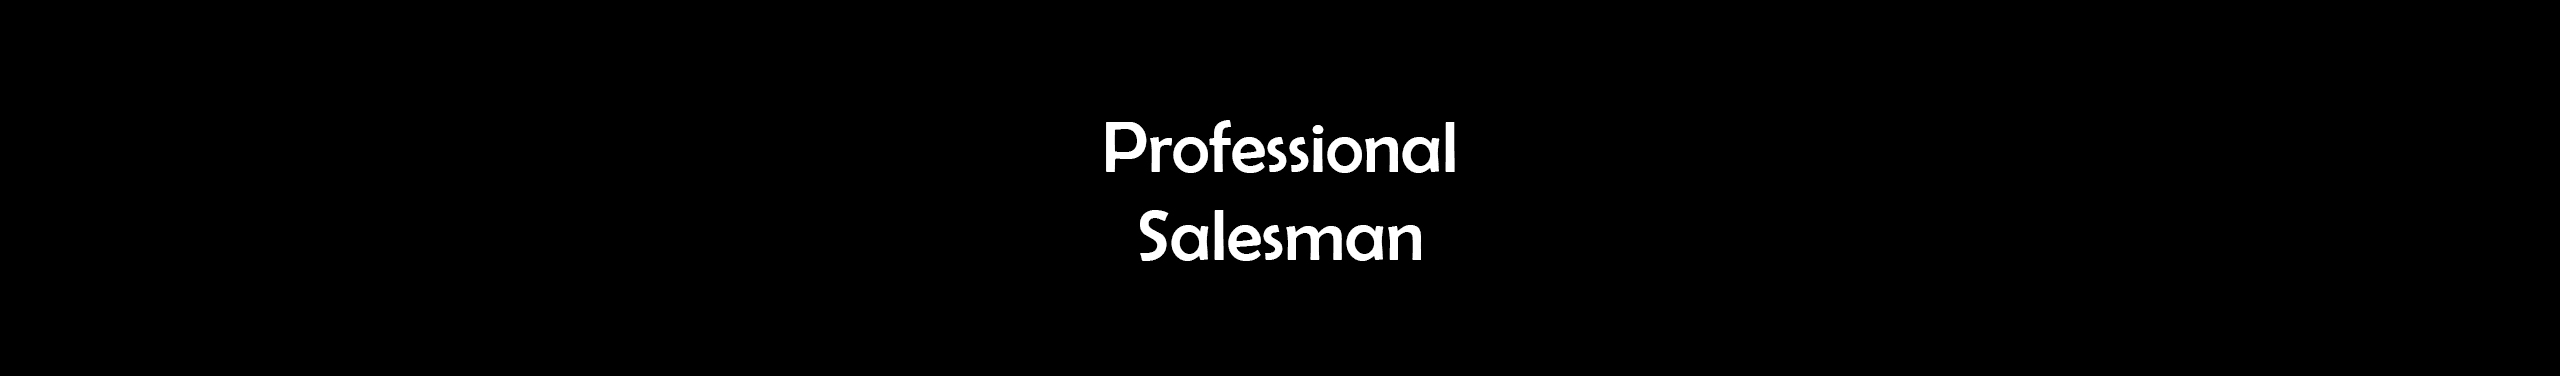 ProfessionalSalesman banner